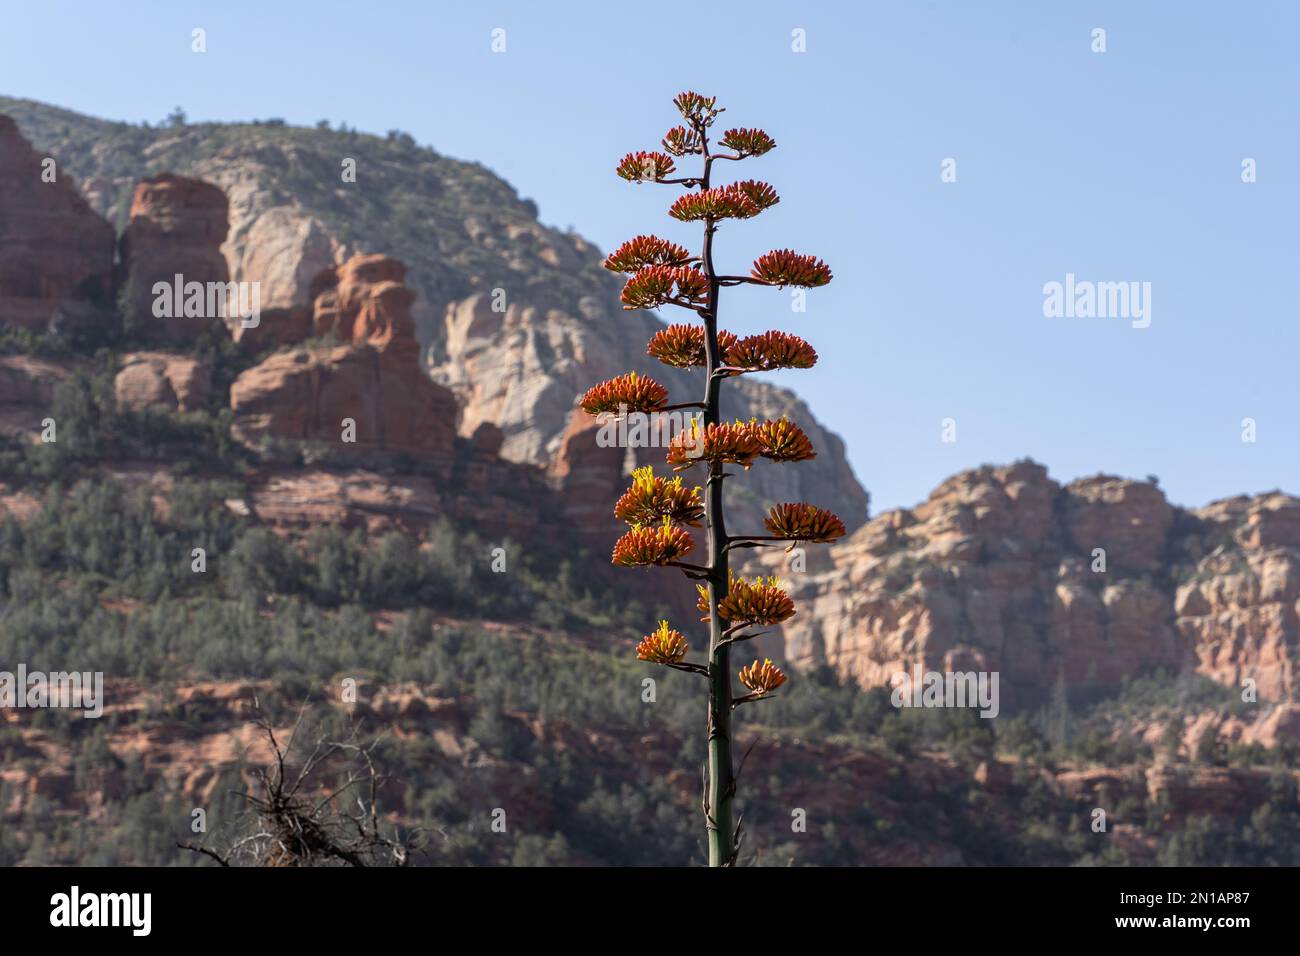 A golden-flowered century plant flower growing in the desert. Stock Photo